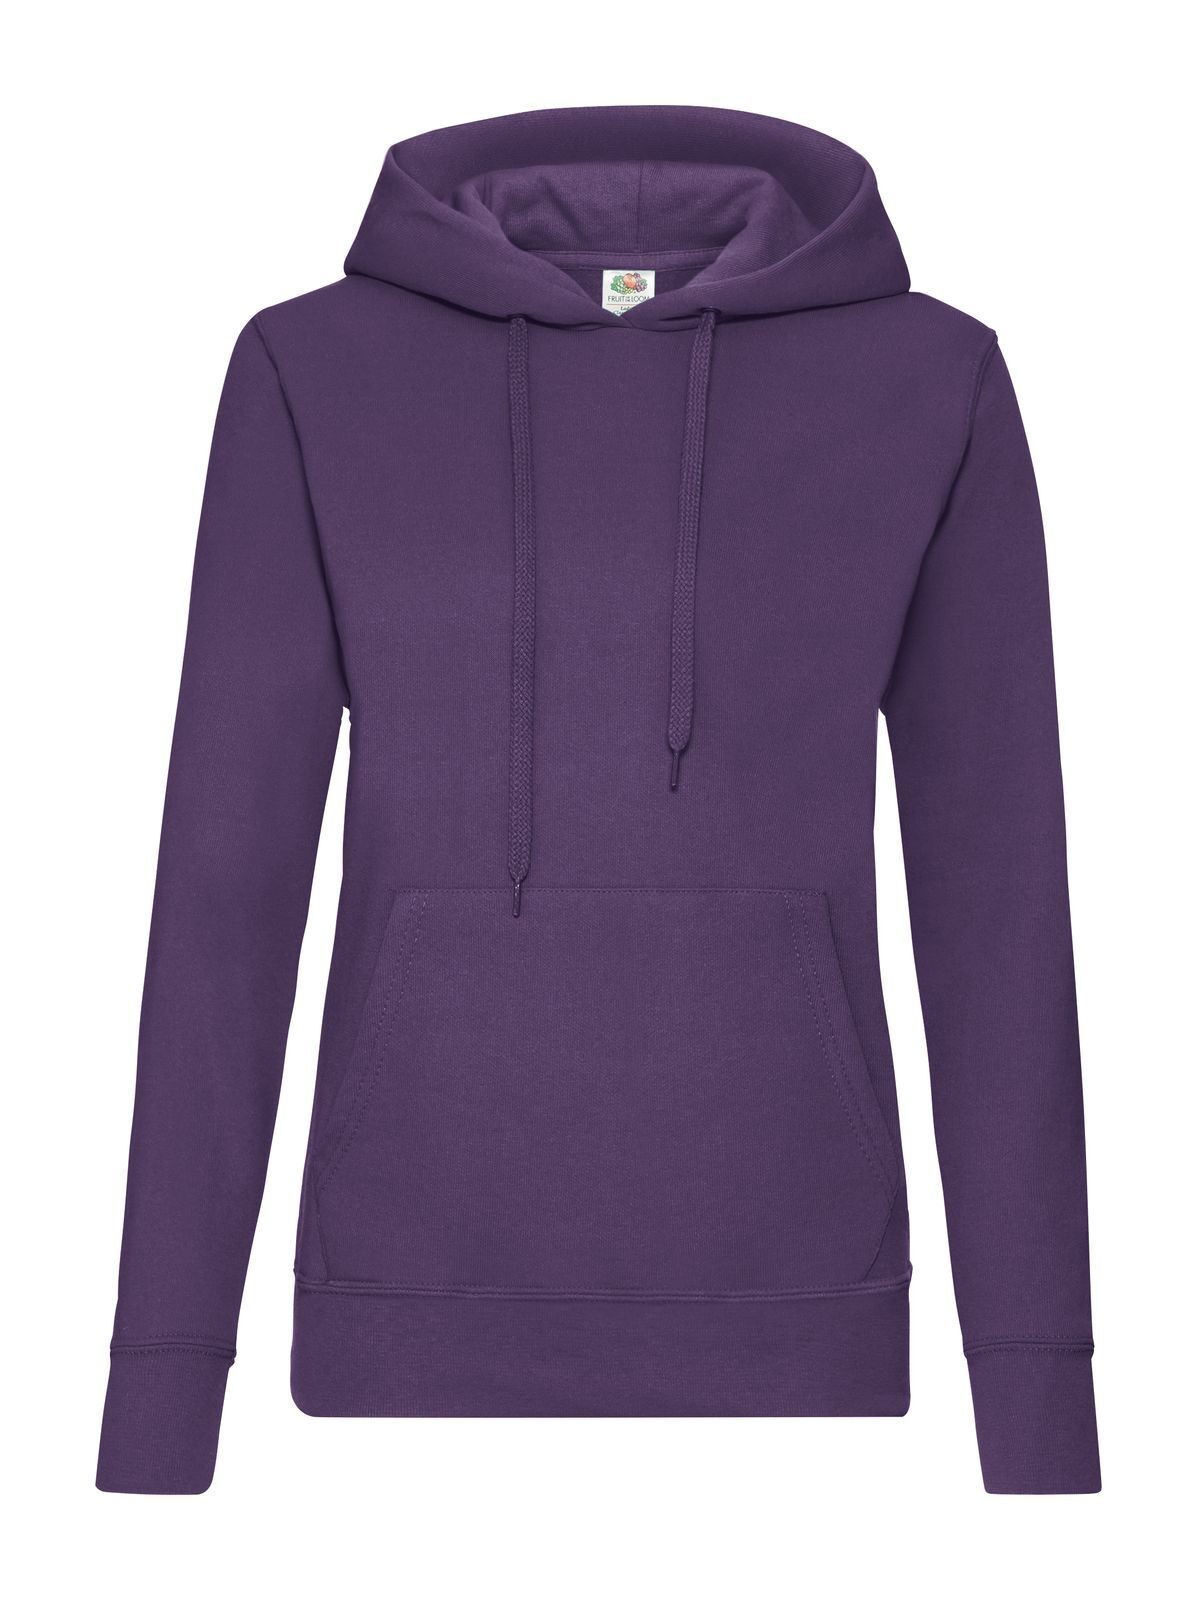 Pittogramma Ladies Classic Hooded Sweat - FR620380 purple